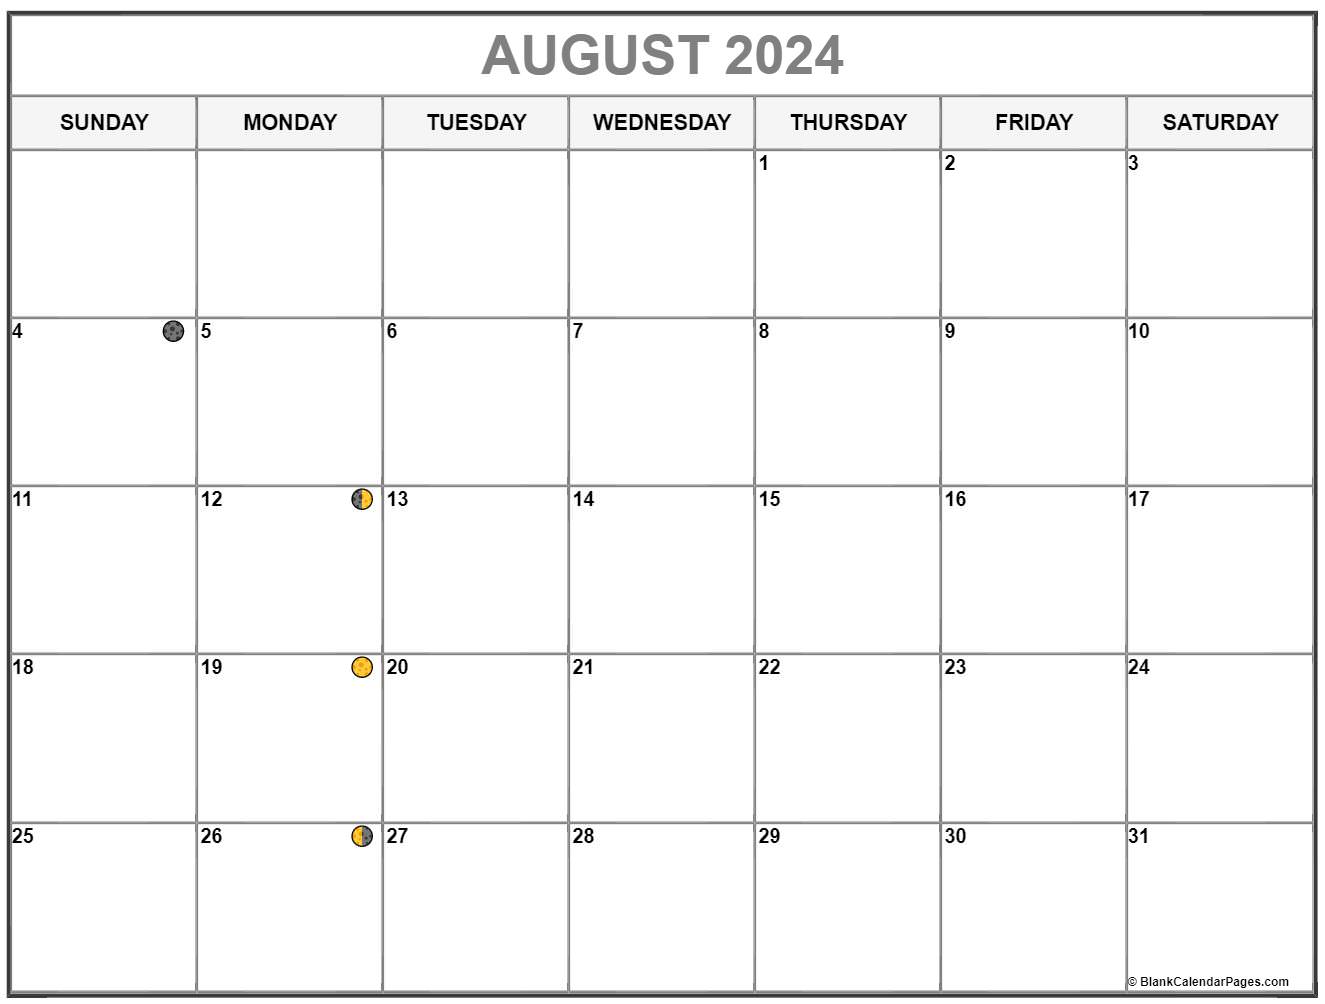 Full Moon Calendar August 2022 August 2022 Lunar Calendar | Moon Phase Calendar